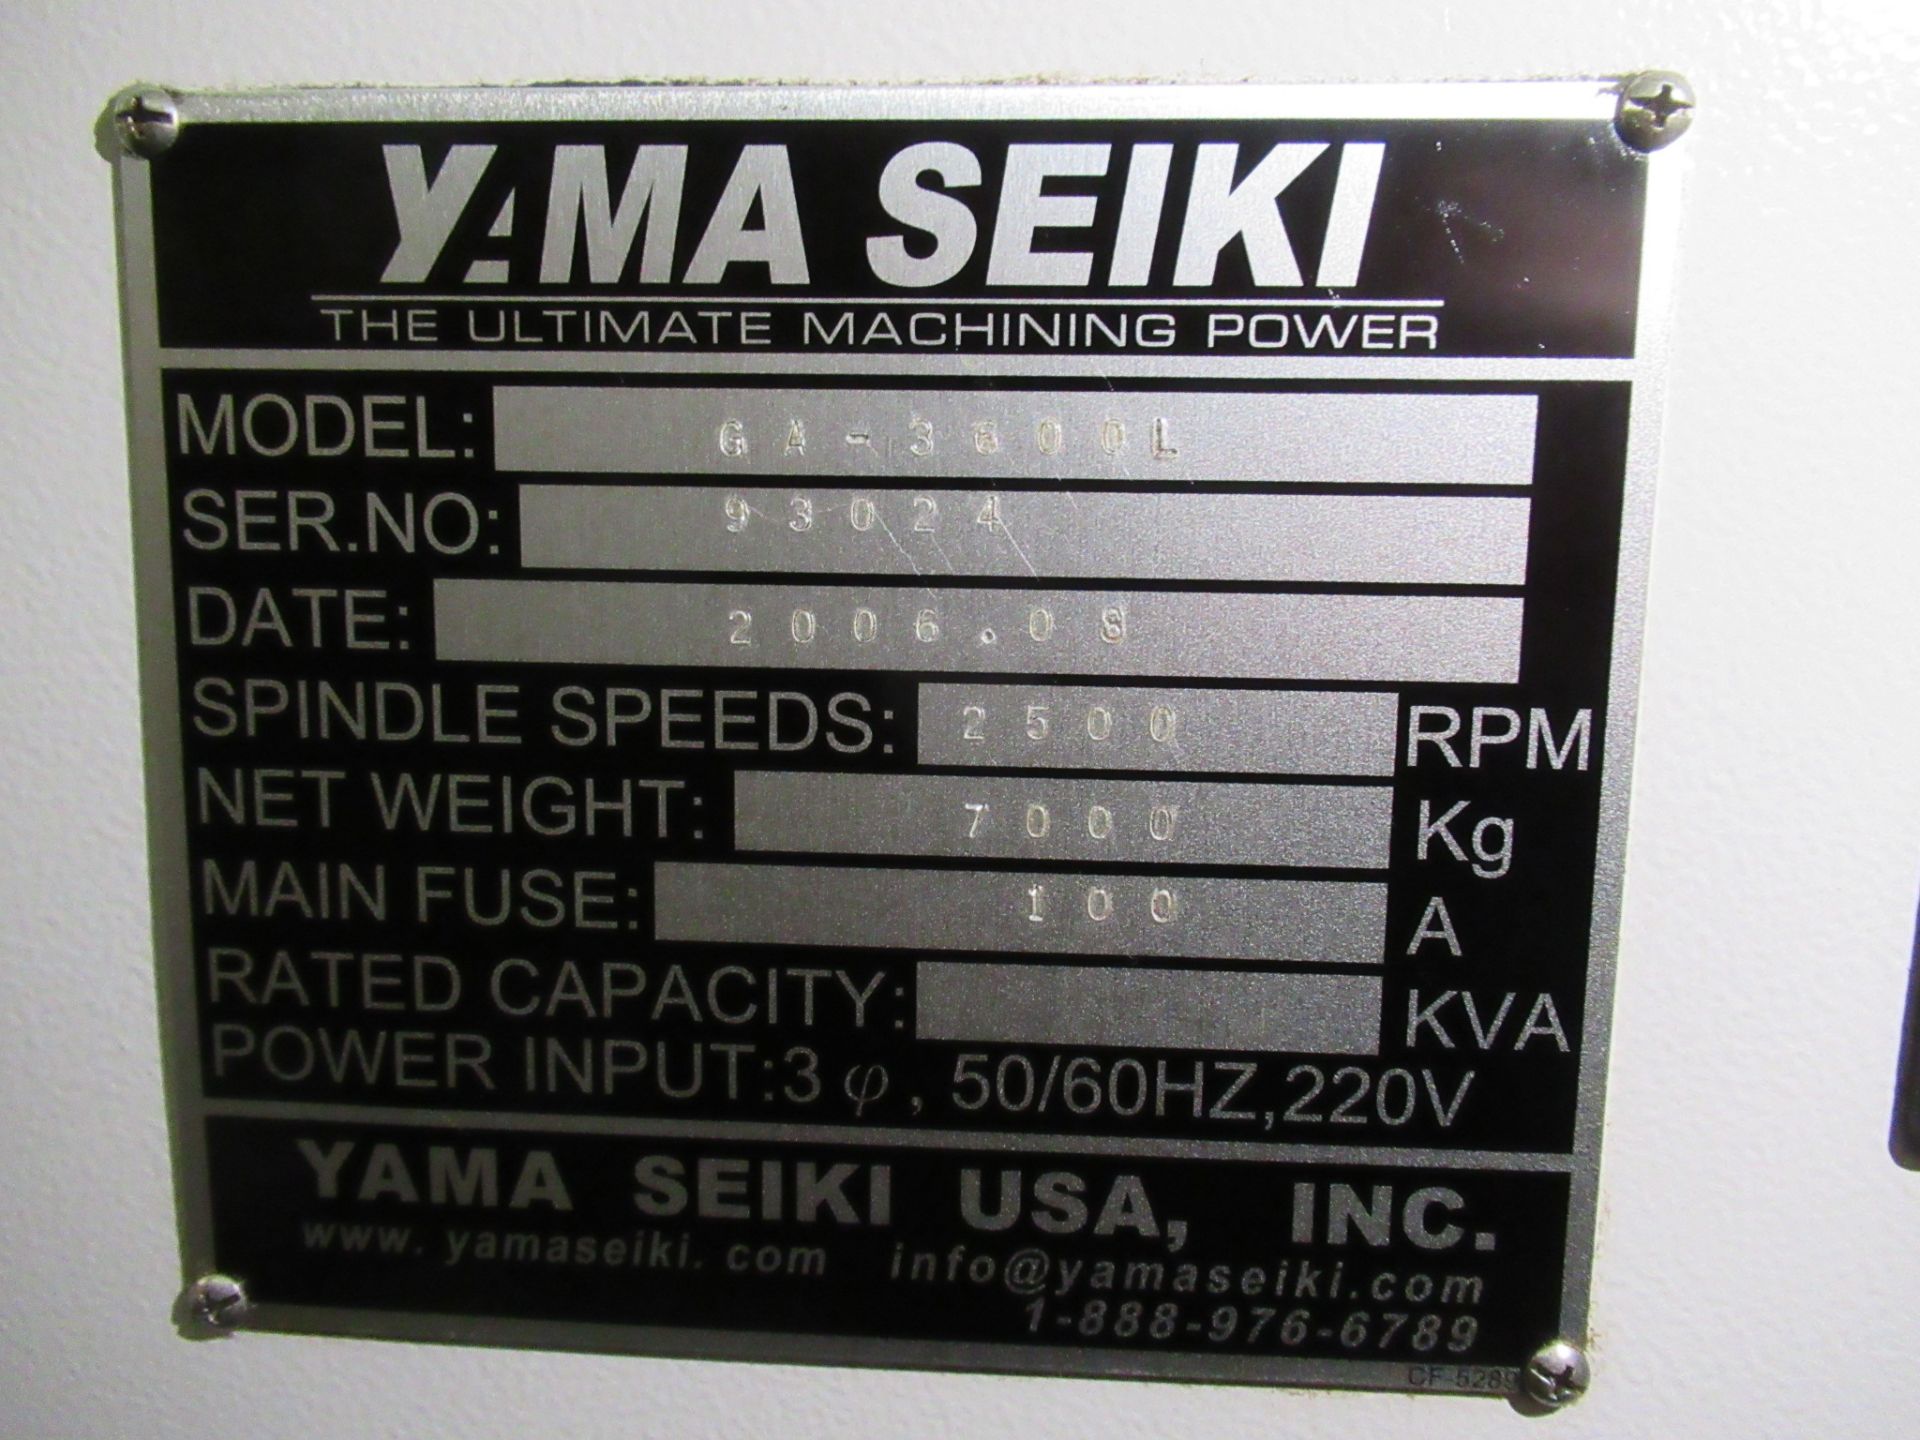 CNC LATHE, YAMA SEIKI MDL. GA-3600L, new 2006, Fanuc Oi-TC CNC control, 23.6” swing, 19.7” max. - Image 6 of 7